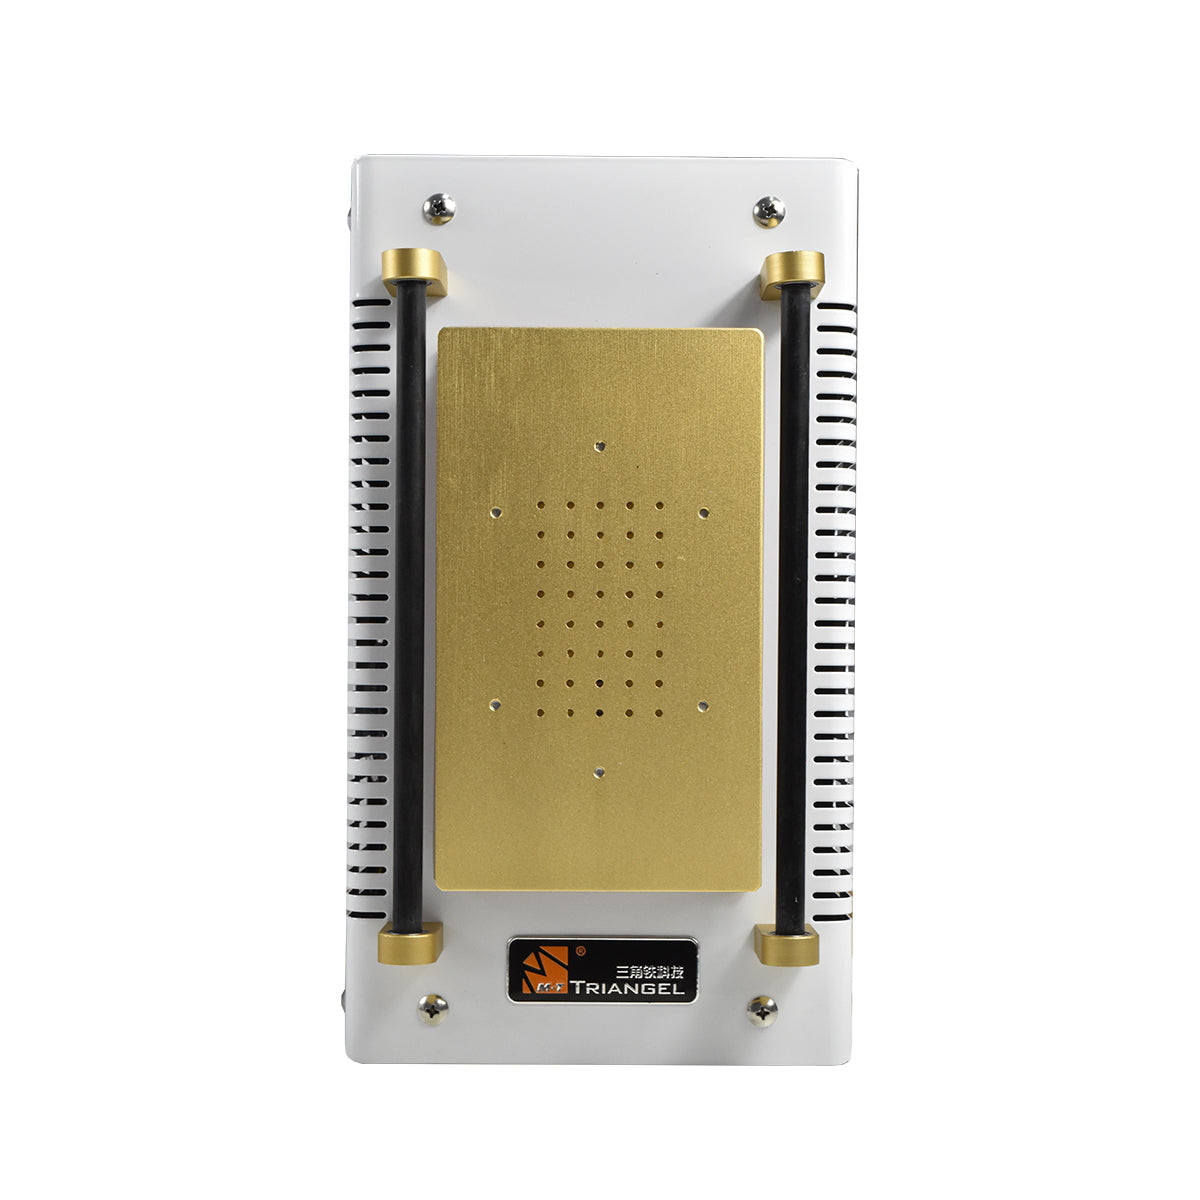 M-Triangel  LCD Screen Separator Machine